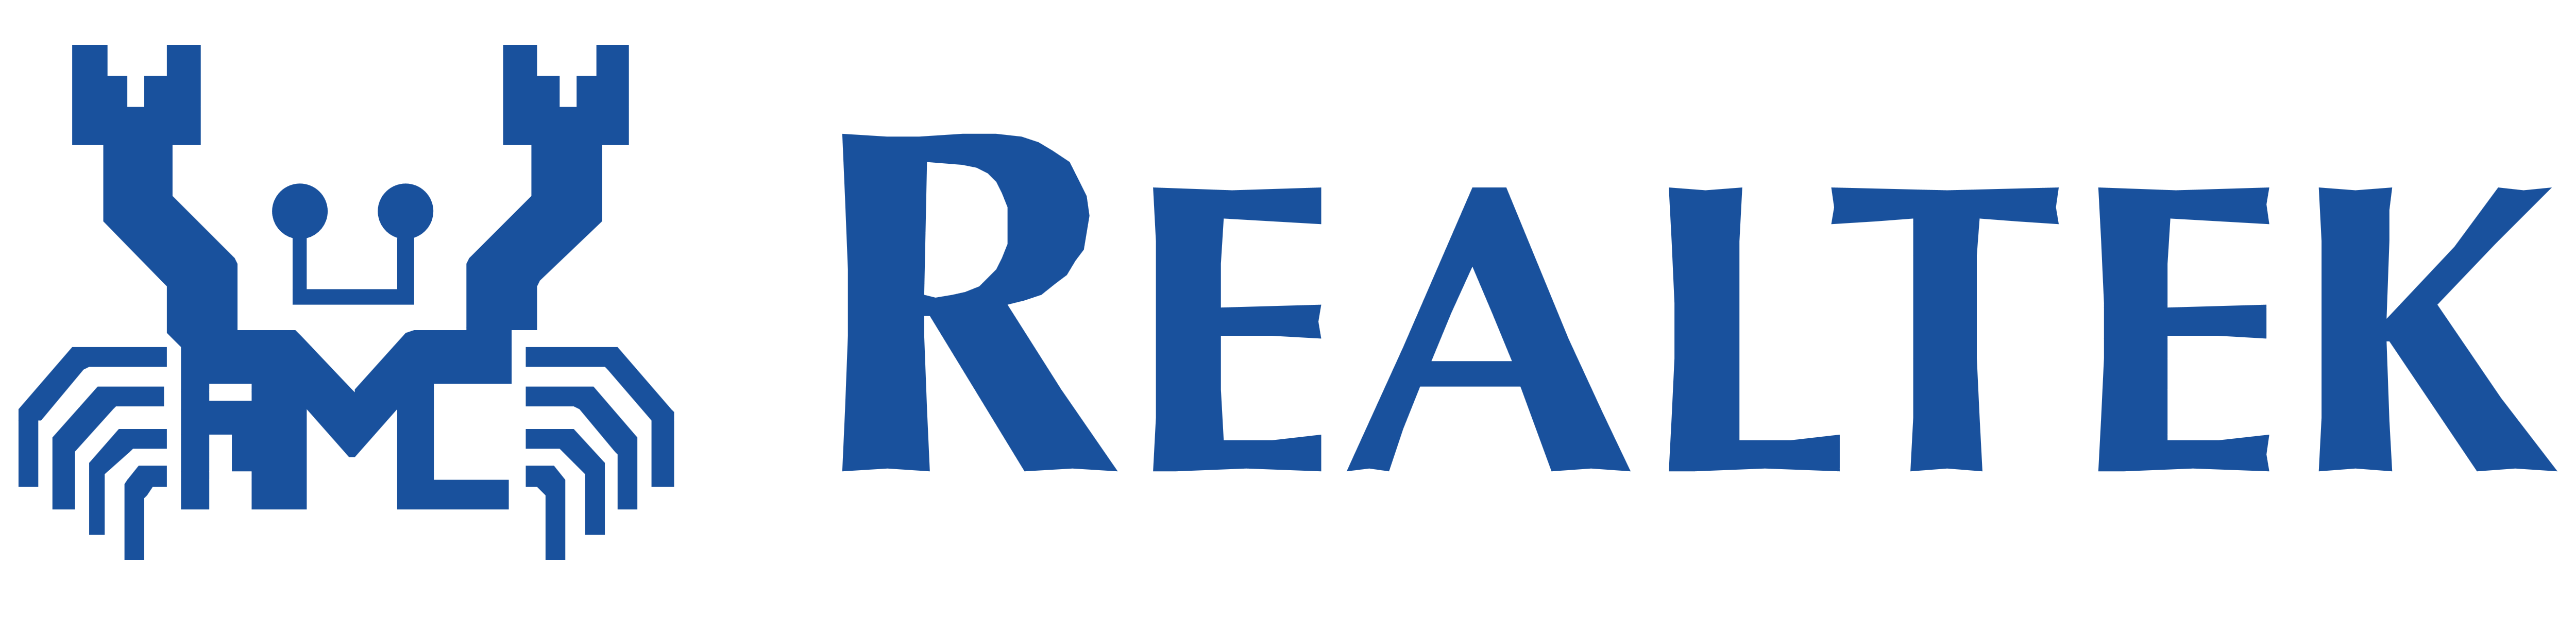 Realtek – Logos Download